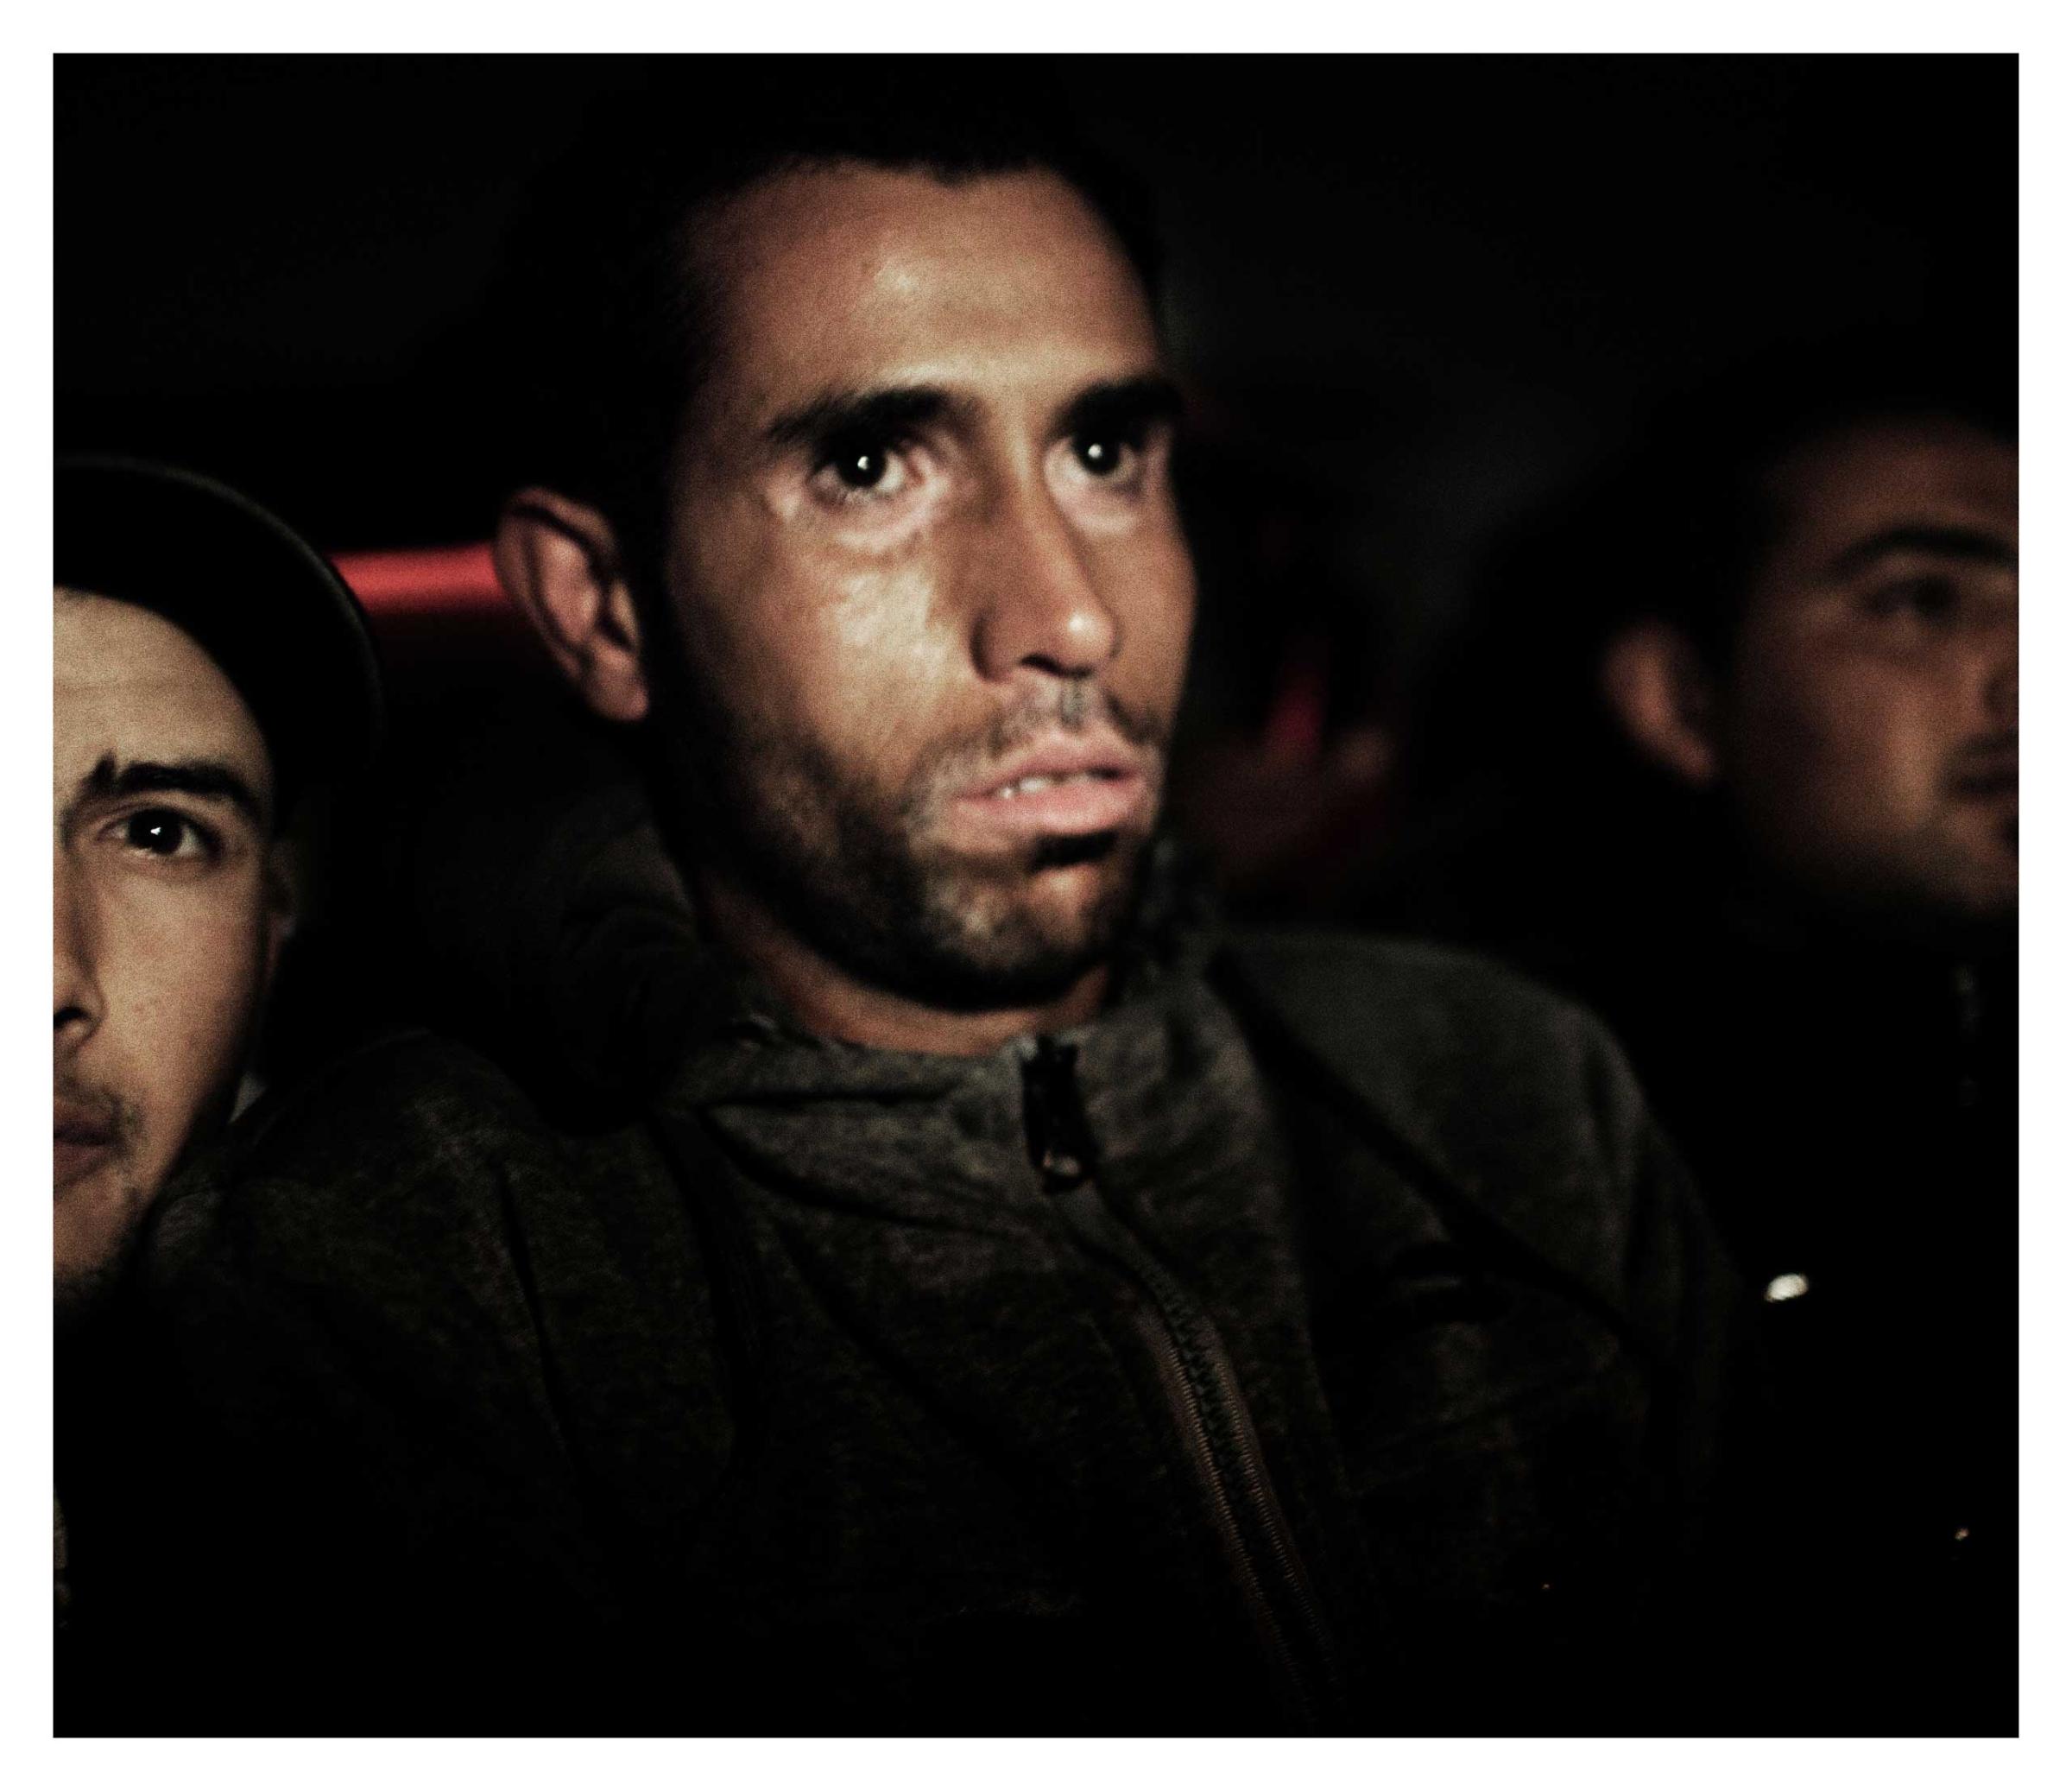 Zarzis, Tunisia - 03/2011. Migrants getting ready to board the boat to reach Italy from the coast of Tunisia.